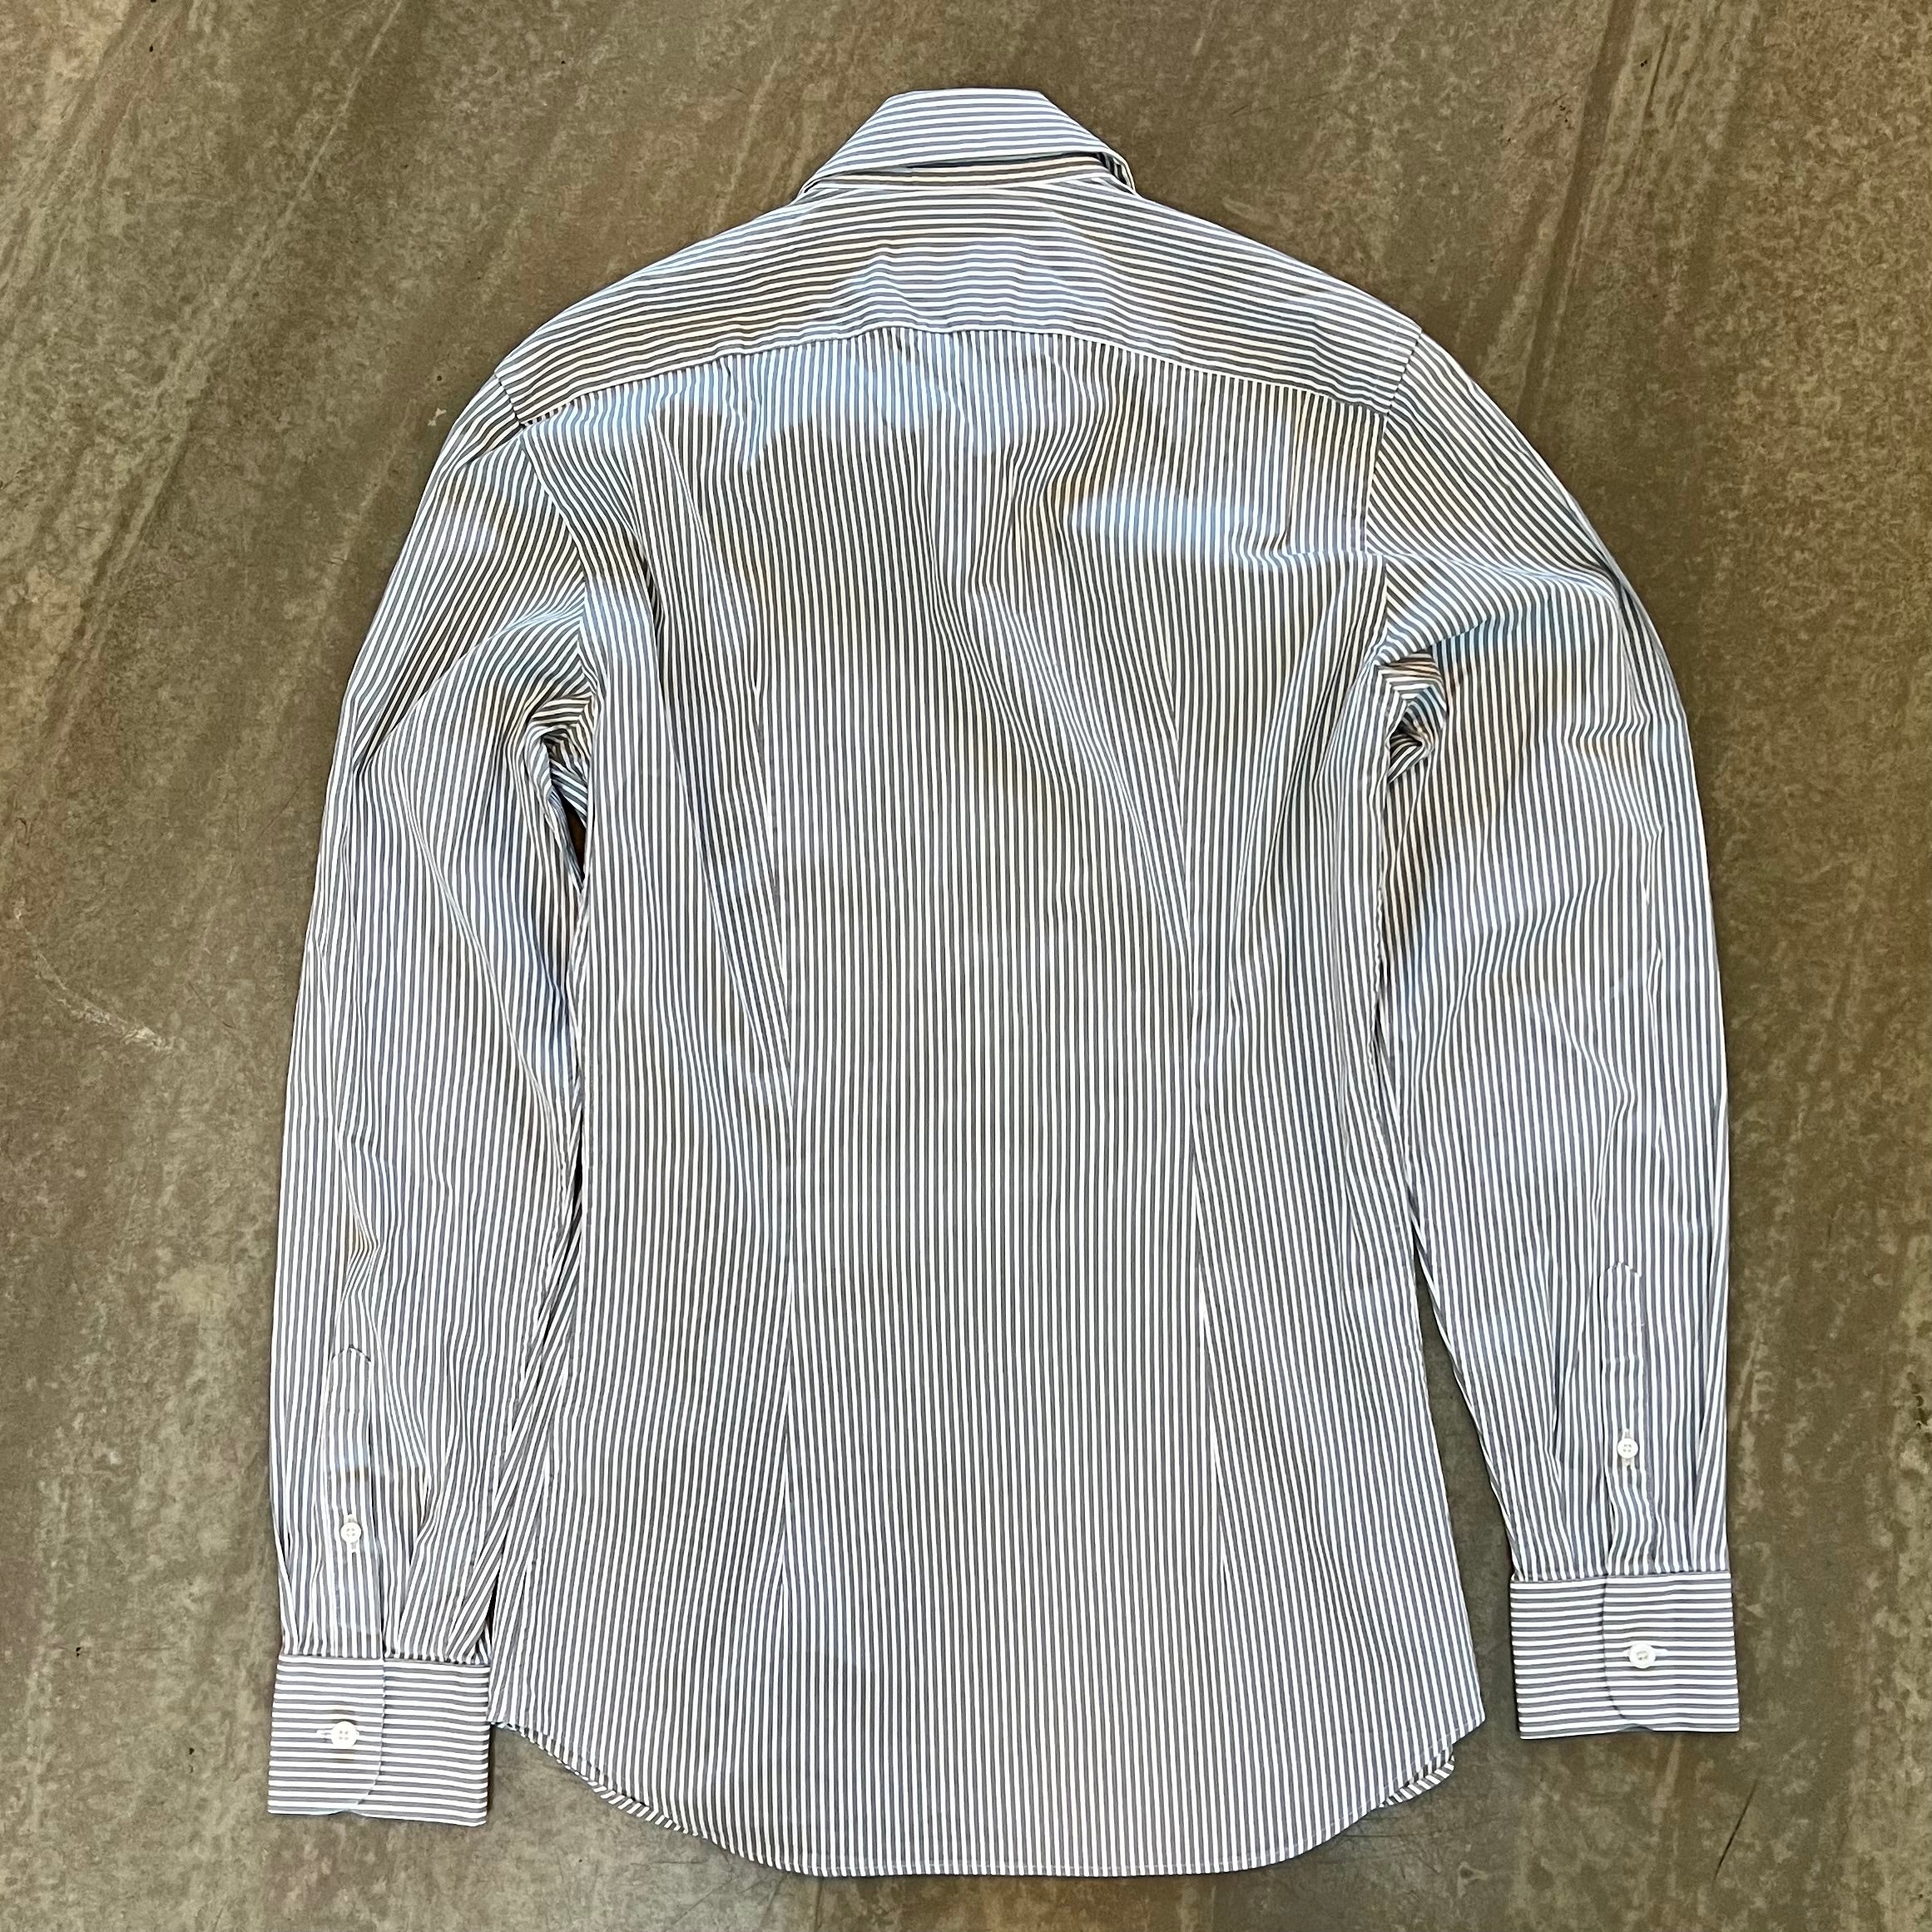 Prada skjorta (storlek 39)